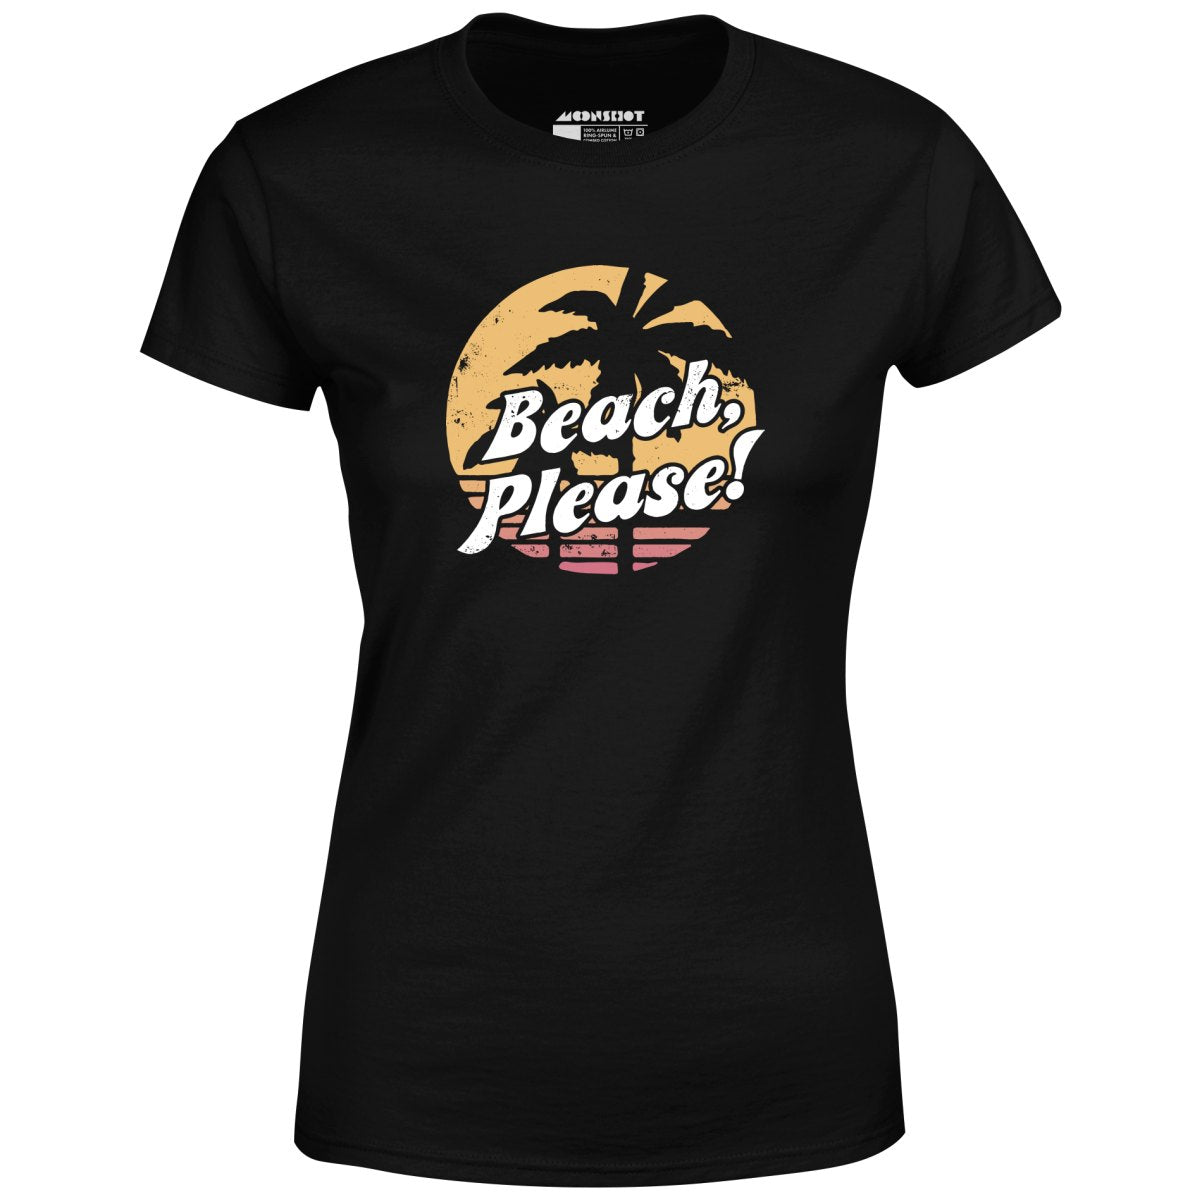 Beach, Please! - Women's T-Shirt